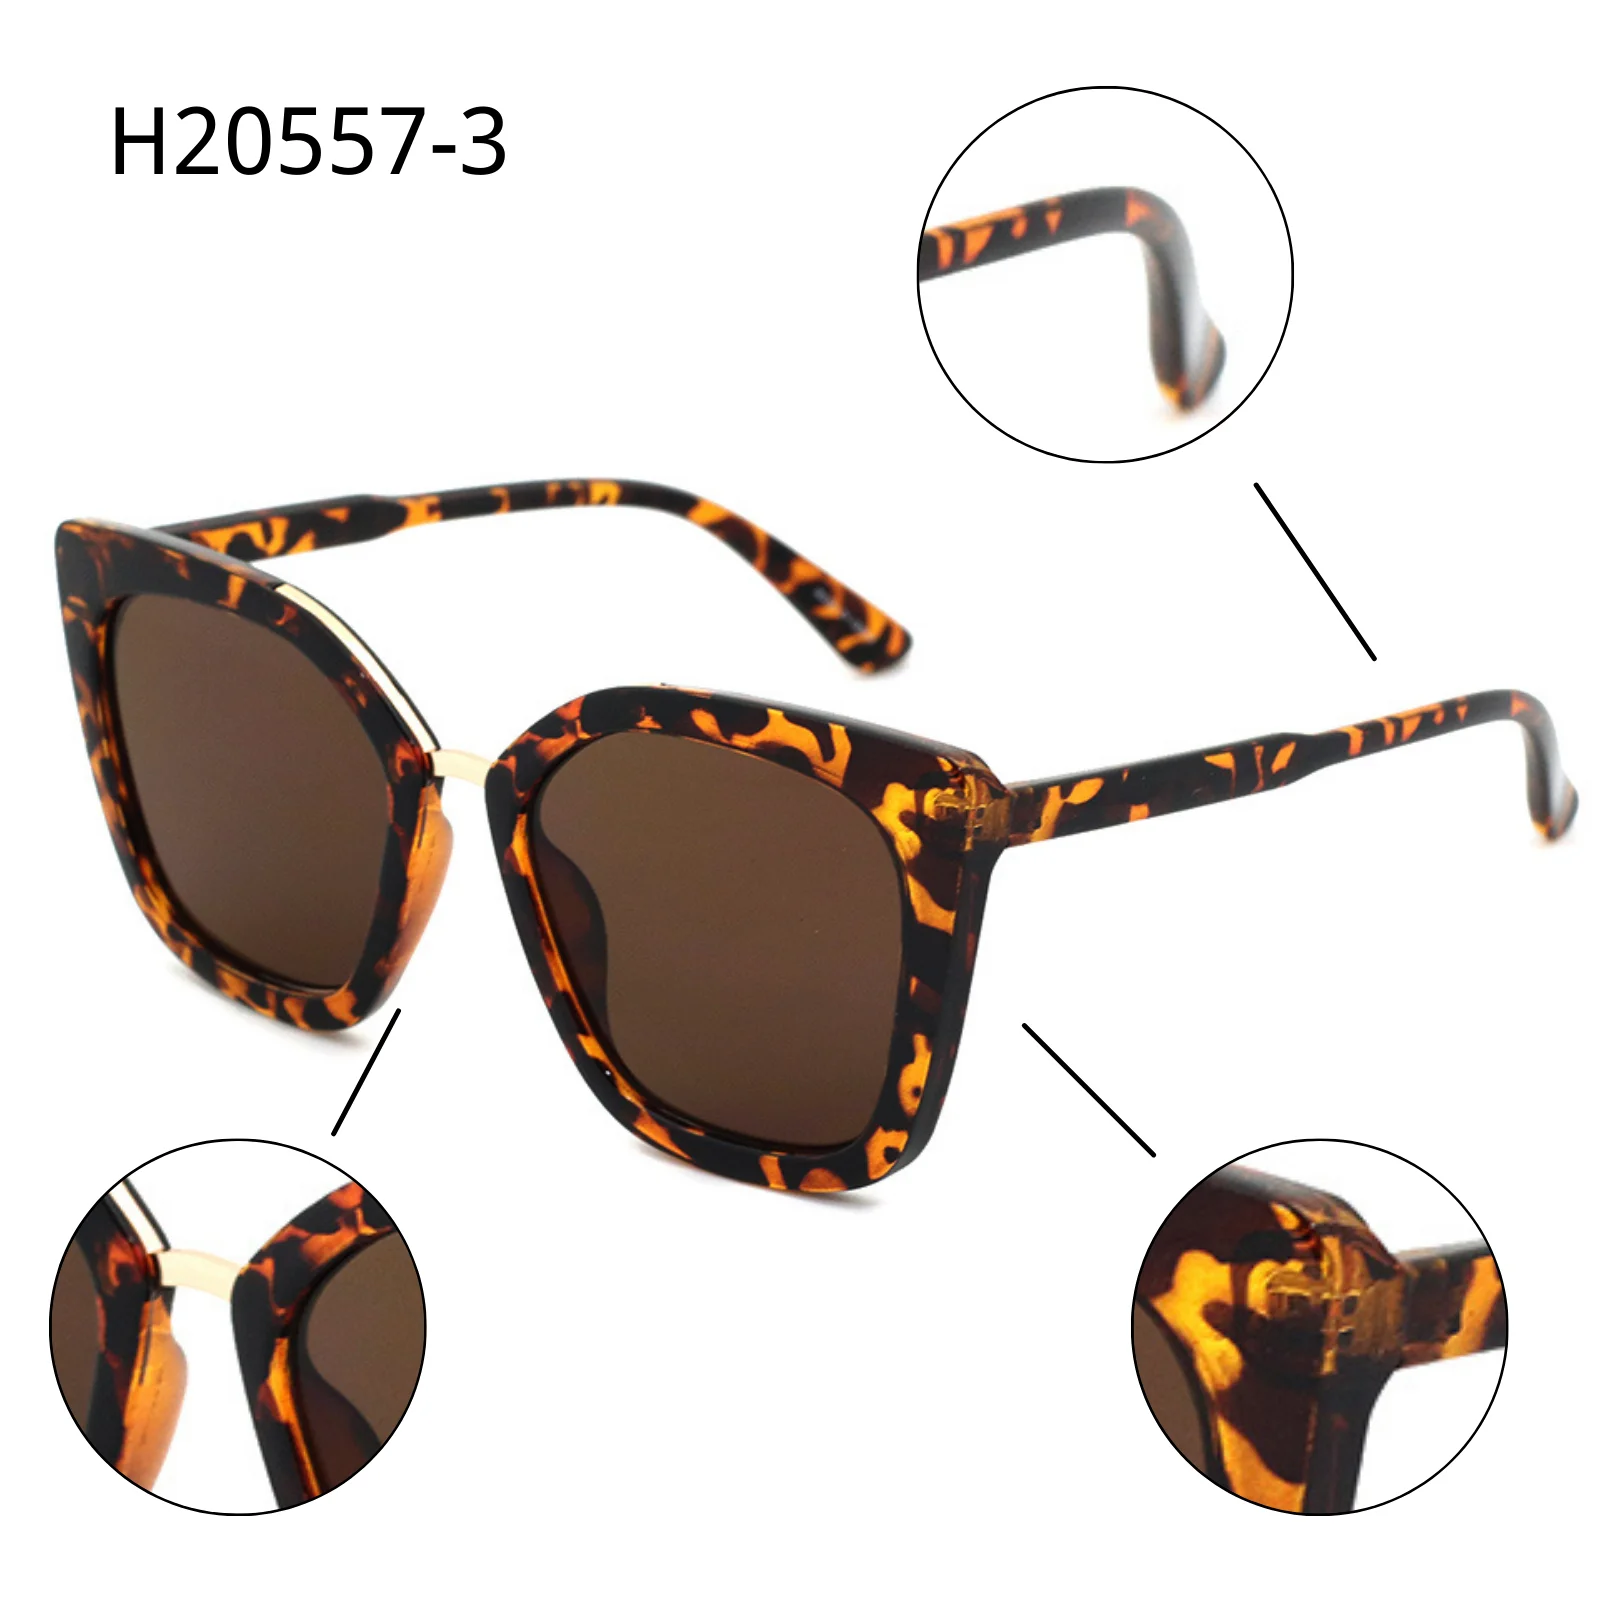 

VIFF HP20557 Vintage Big Frame Sun Glasses River Hot Amazon Seller Chinese Manufacturer Fashion Women Sunglasses Oversized